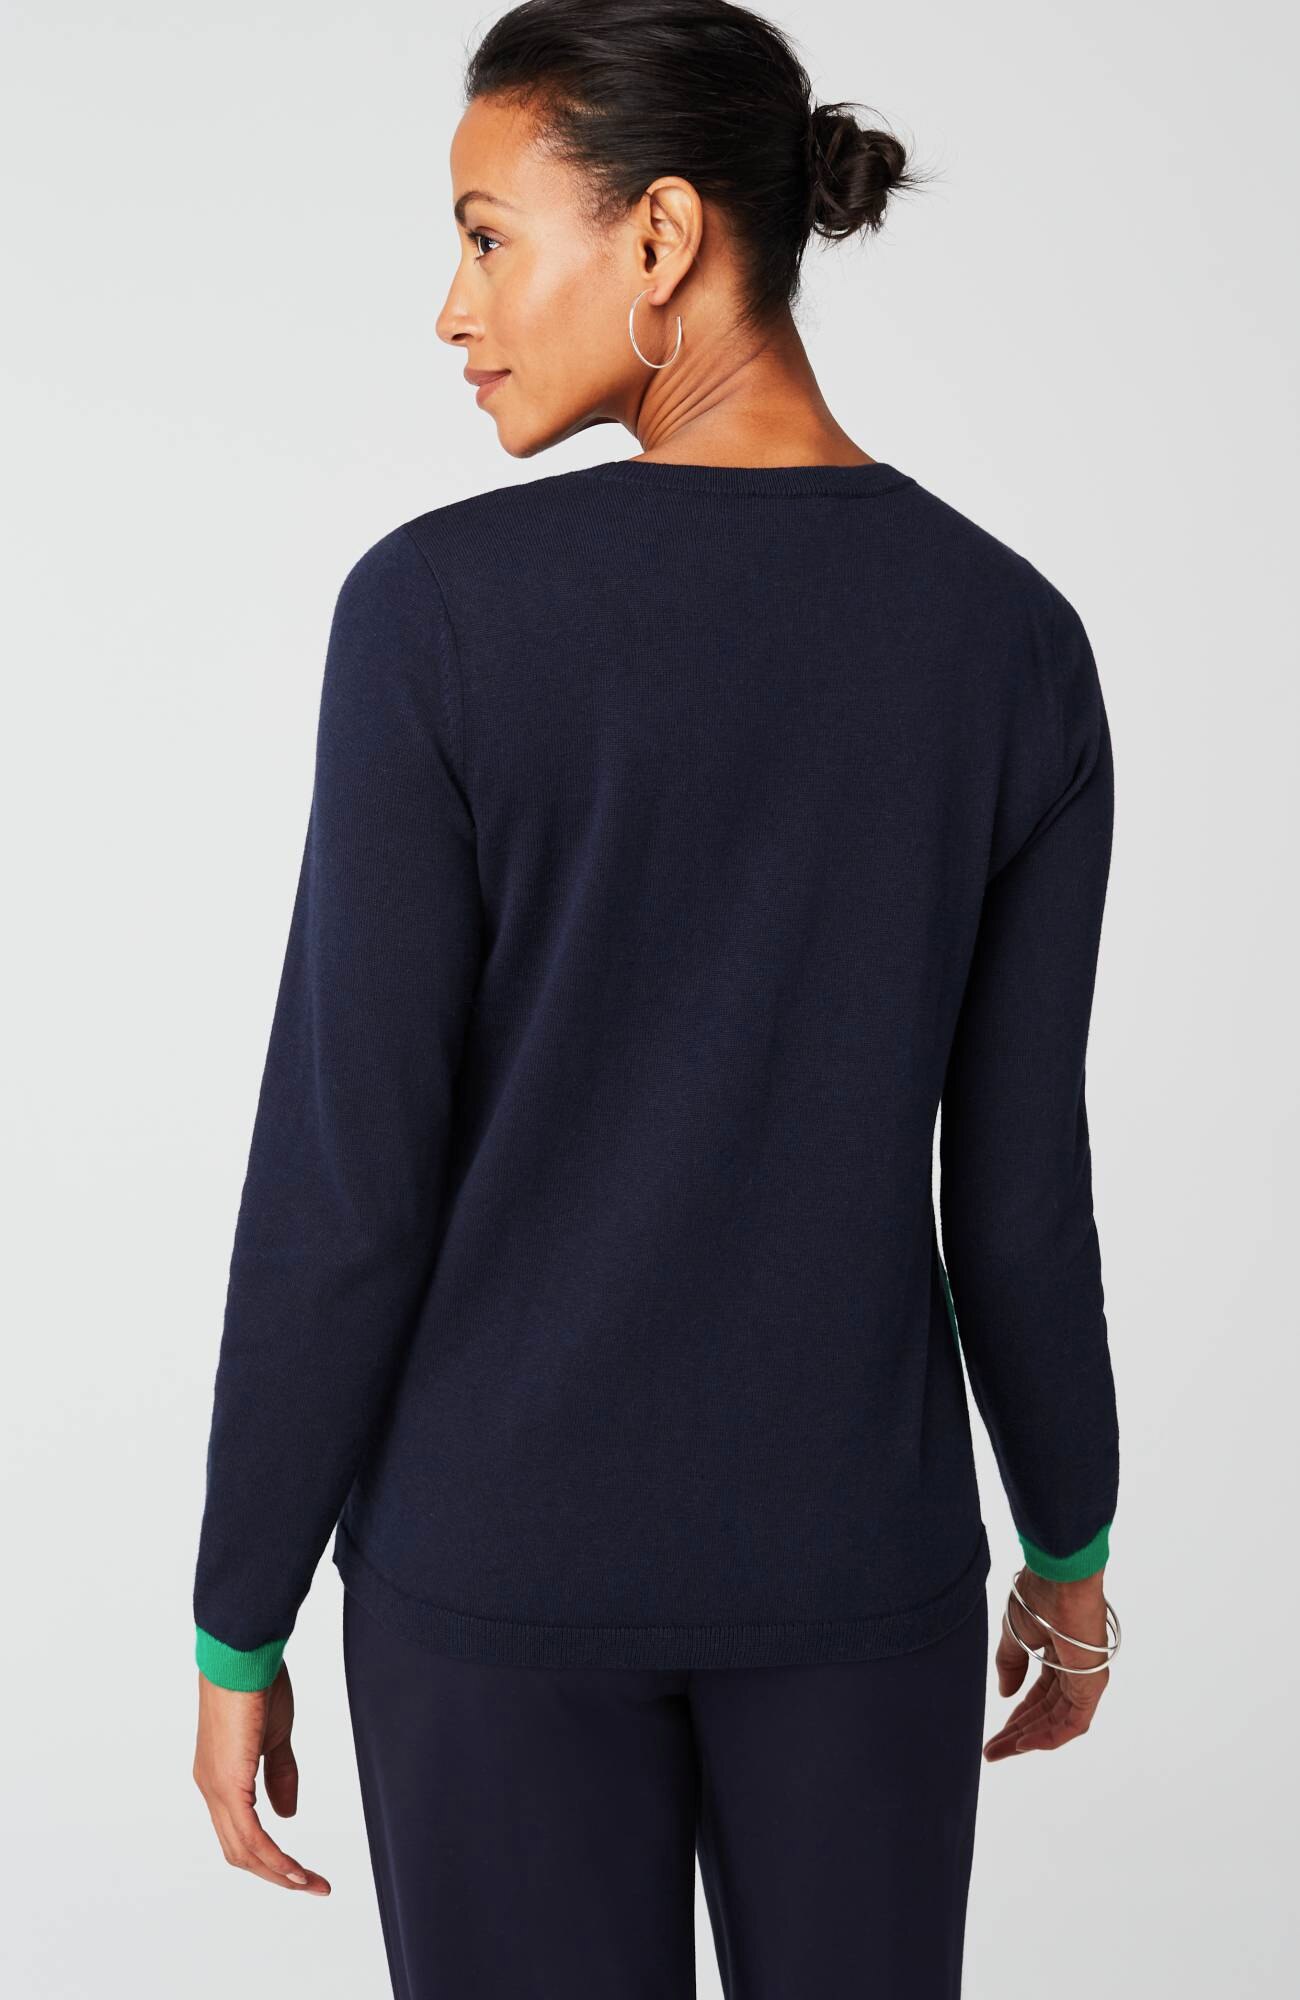 Wearever Contrast-Trimmed Sweater